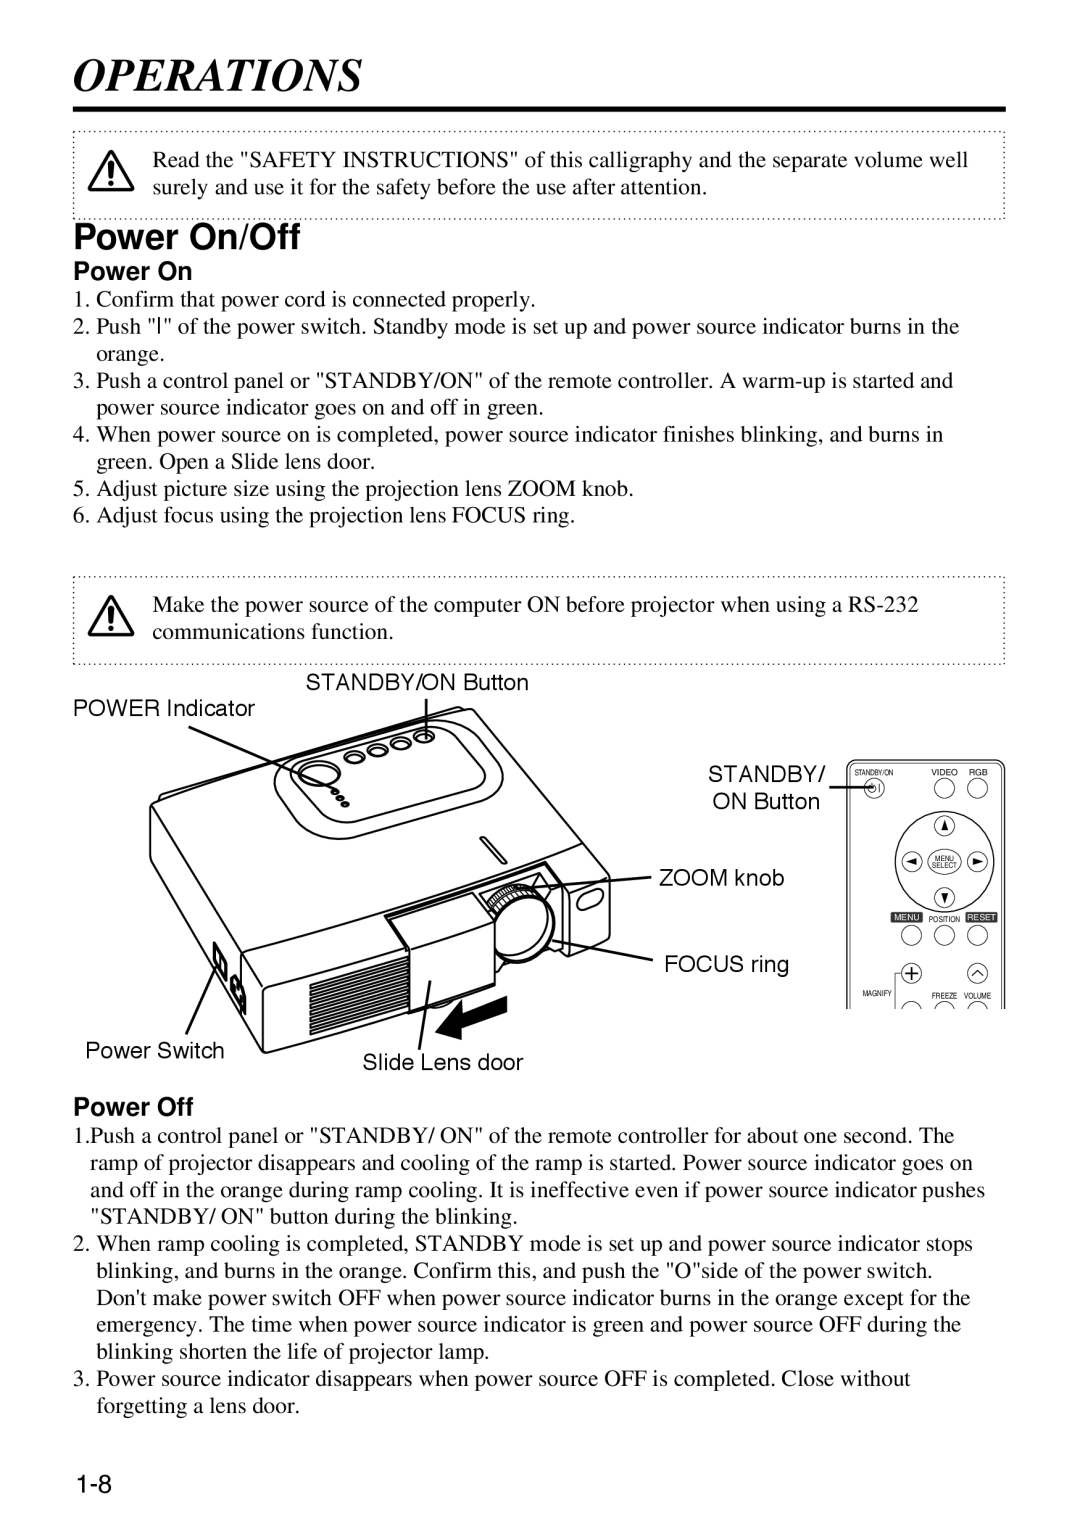 Polaroid SVGA 270 manual Operations, Power On/Off, Power Off 